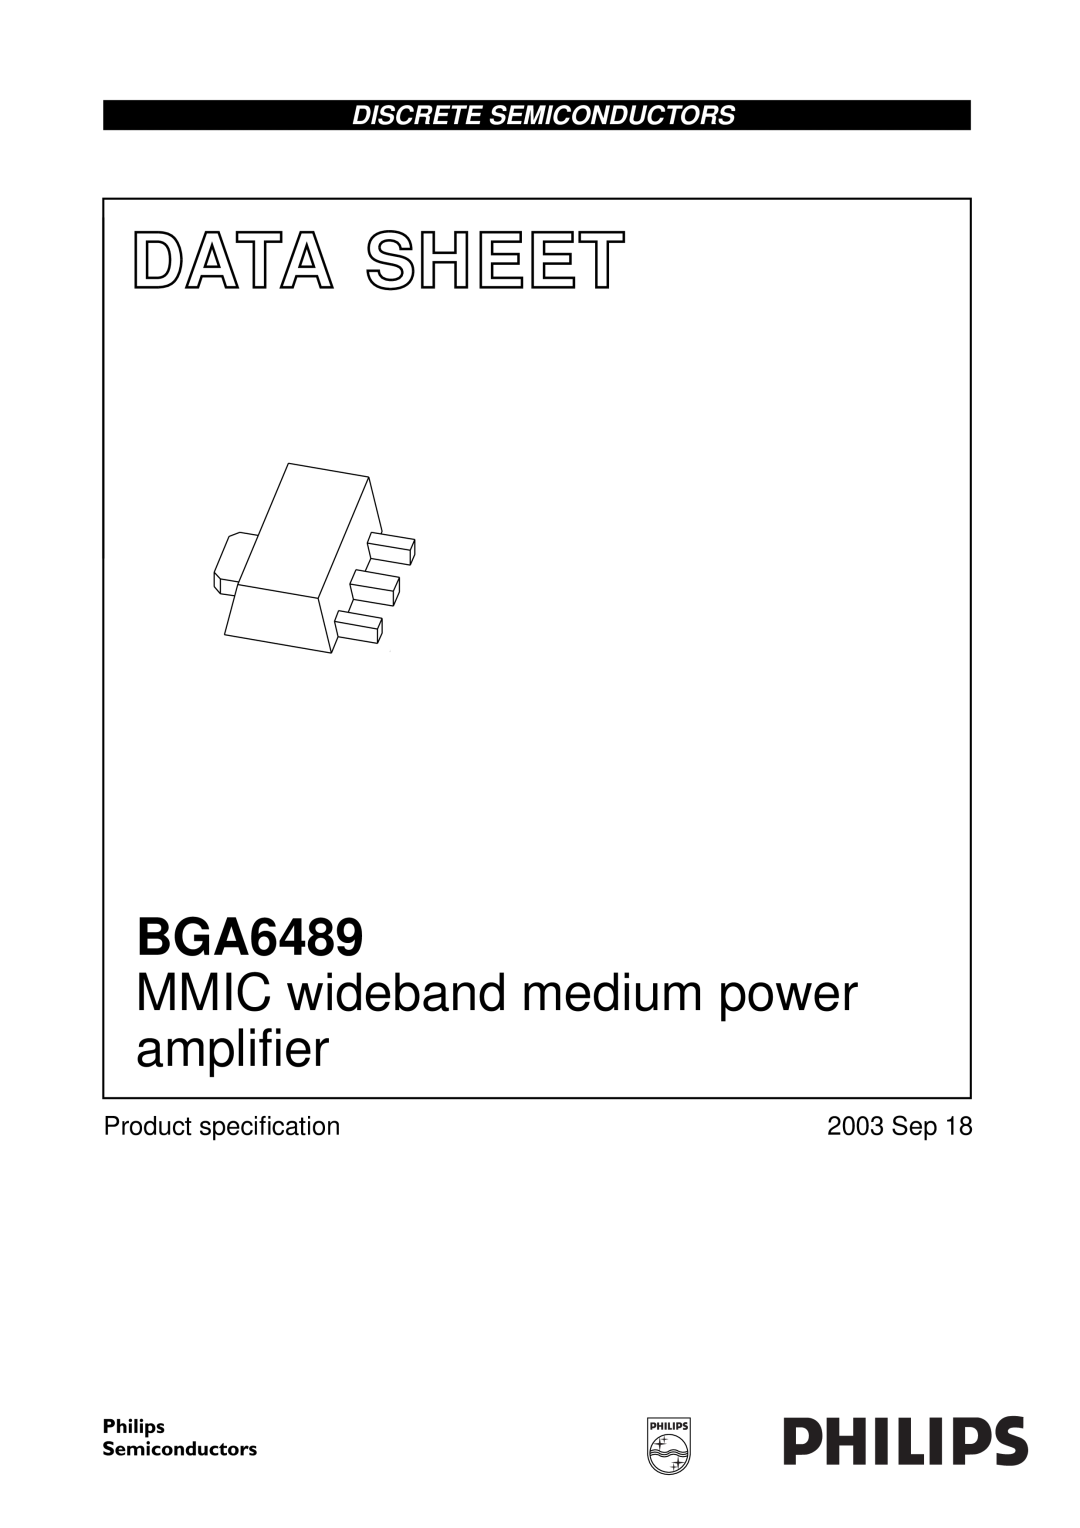 Philips BGA6489 manual Product speciﬁcation, Data Sheet, MMIC wideband medium power amplifier, Discrete Semiconductors 